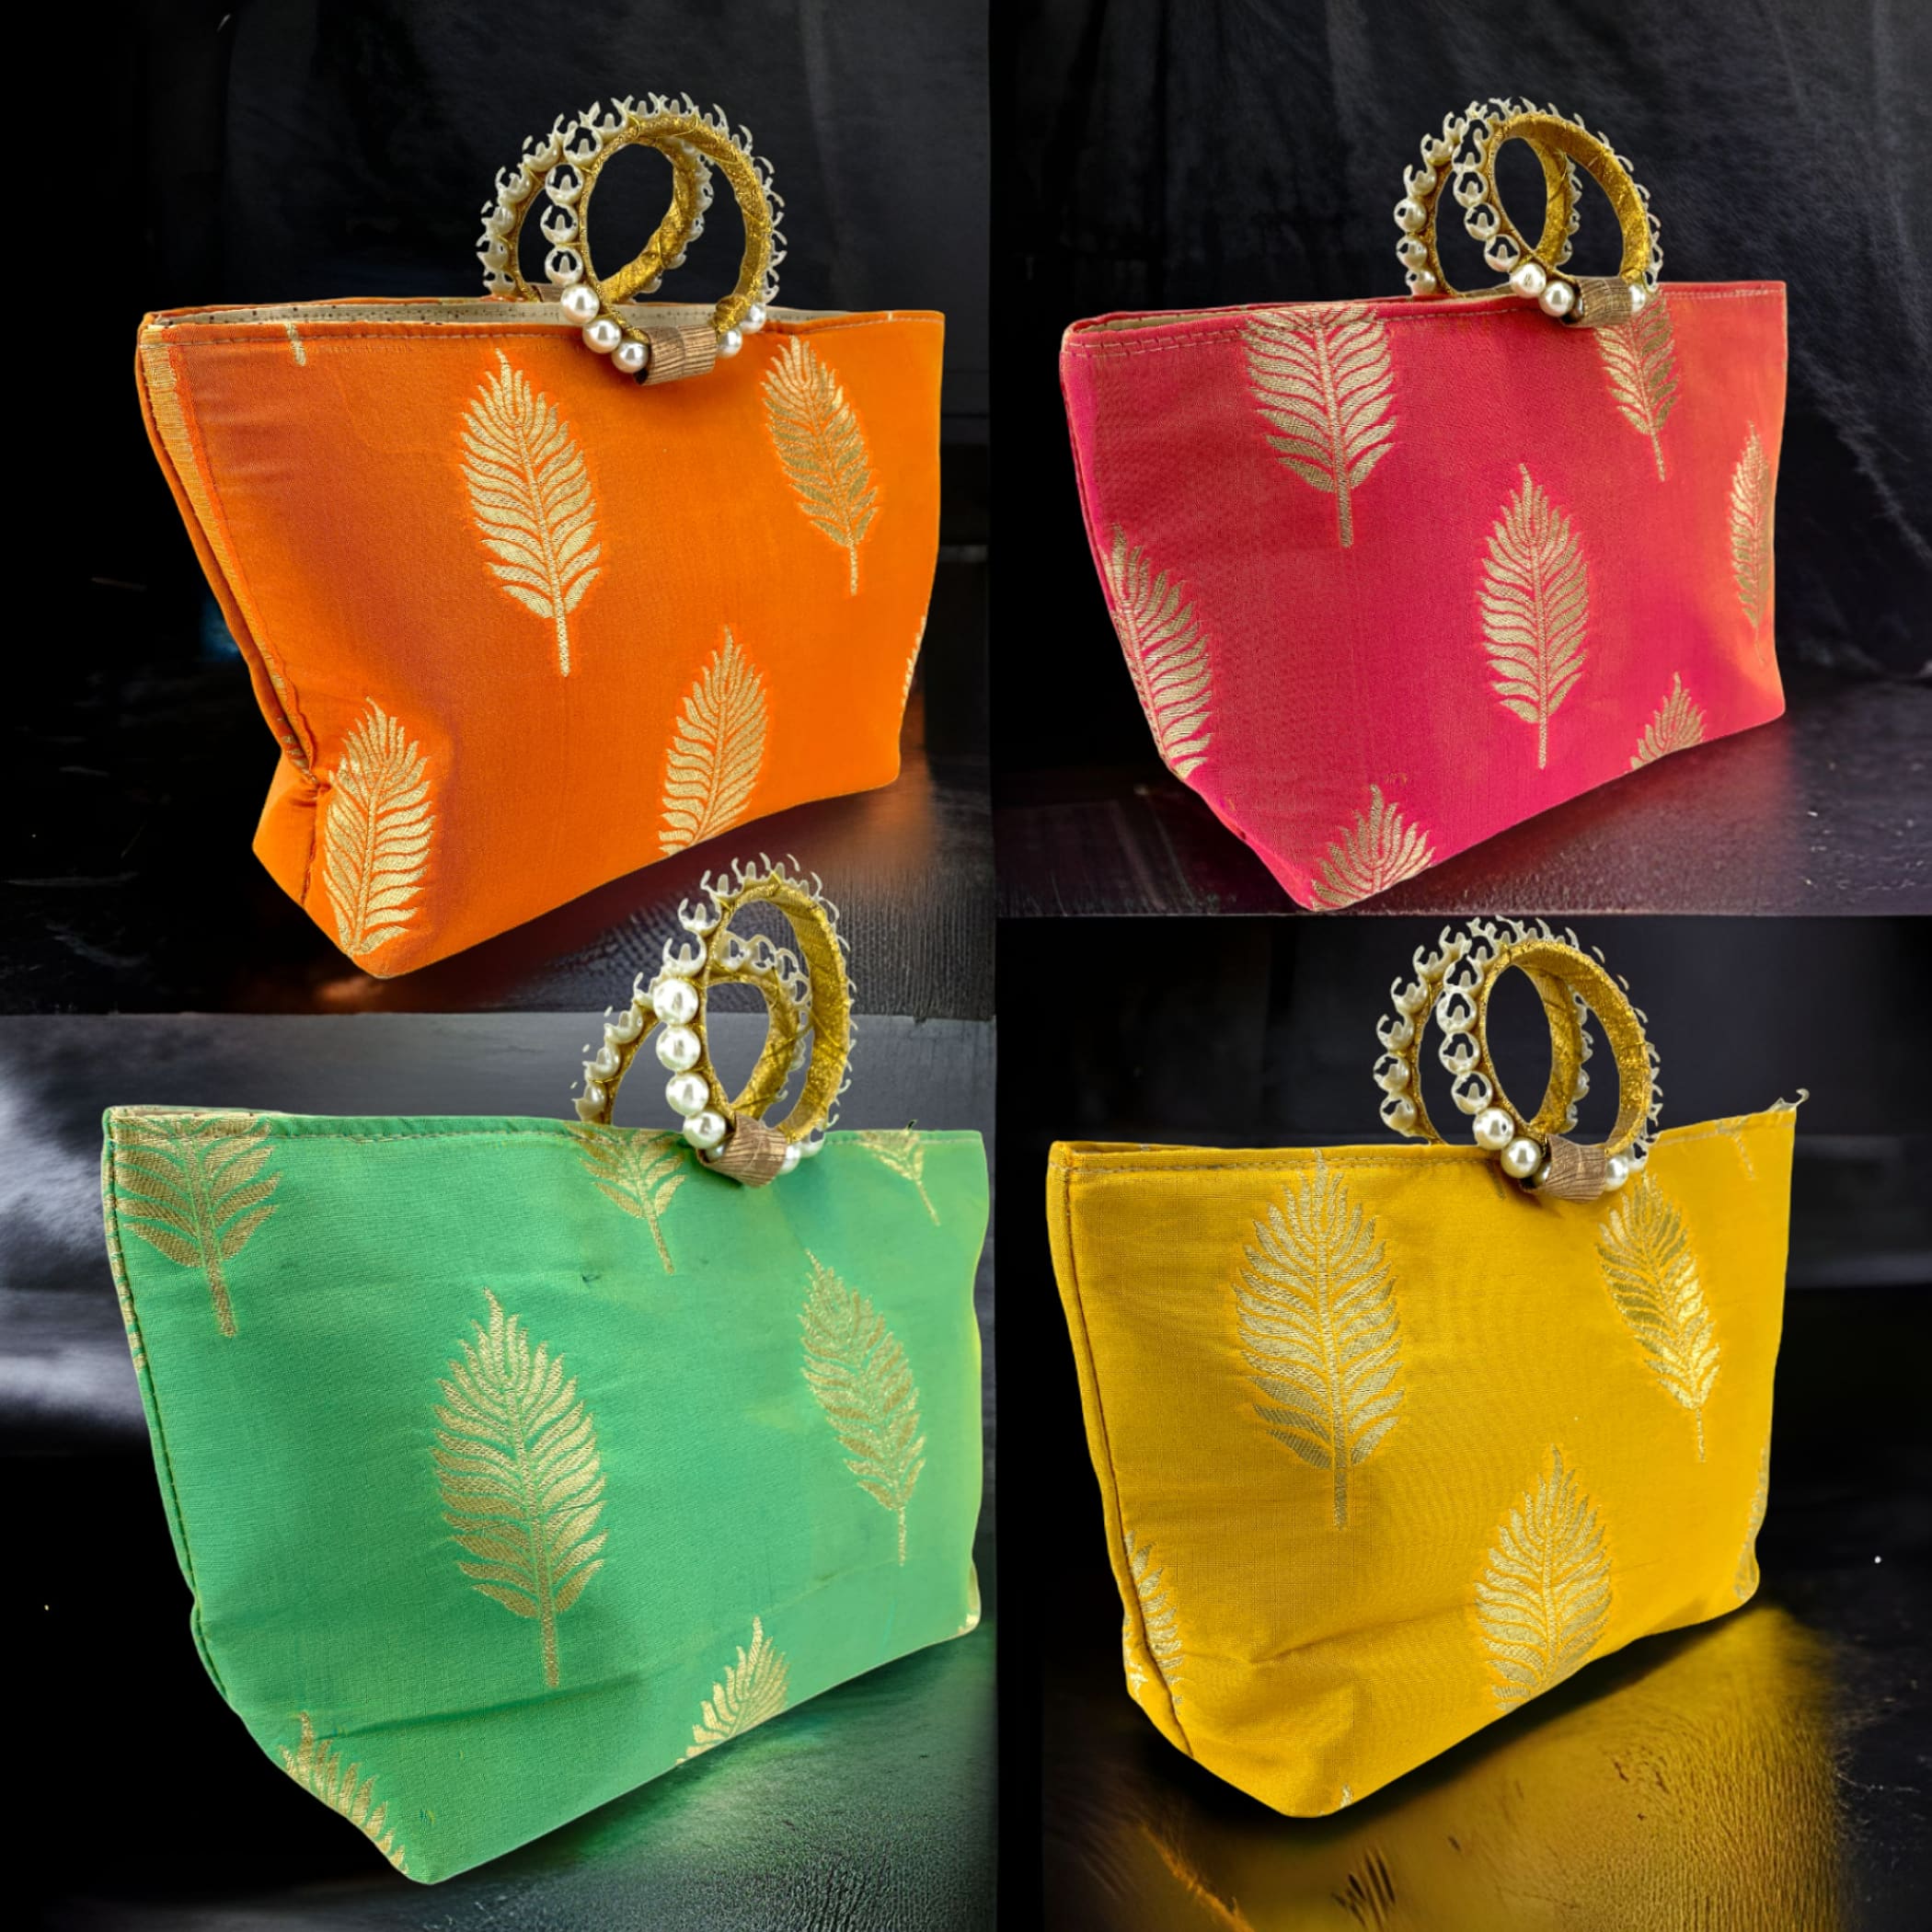 How To Make Paper Handbag - EASY PAPER CRAFT IDEAS - Paper Purse bag -  YouTube